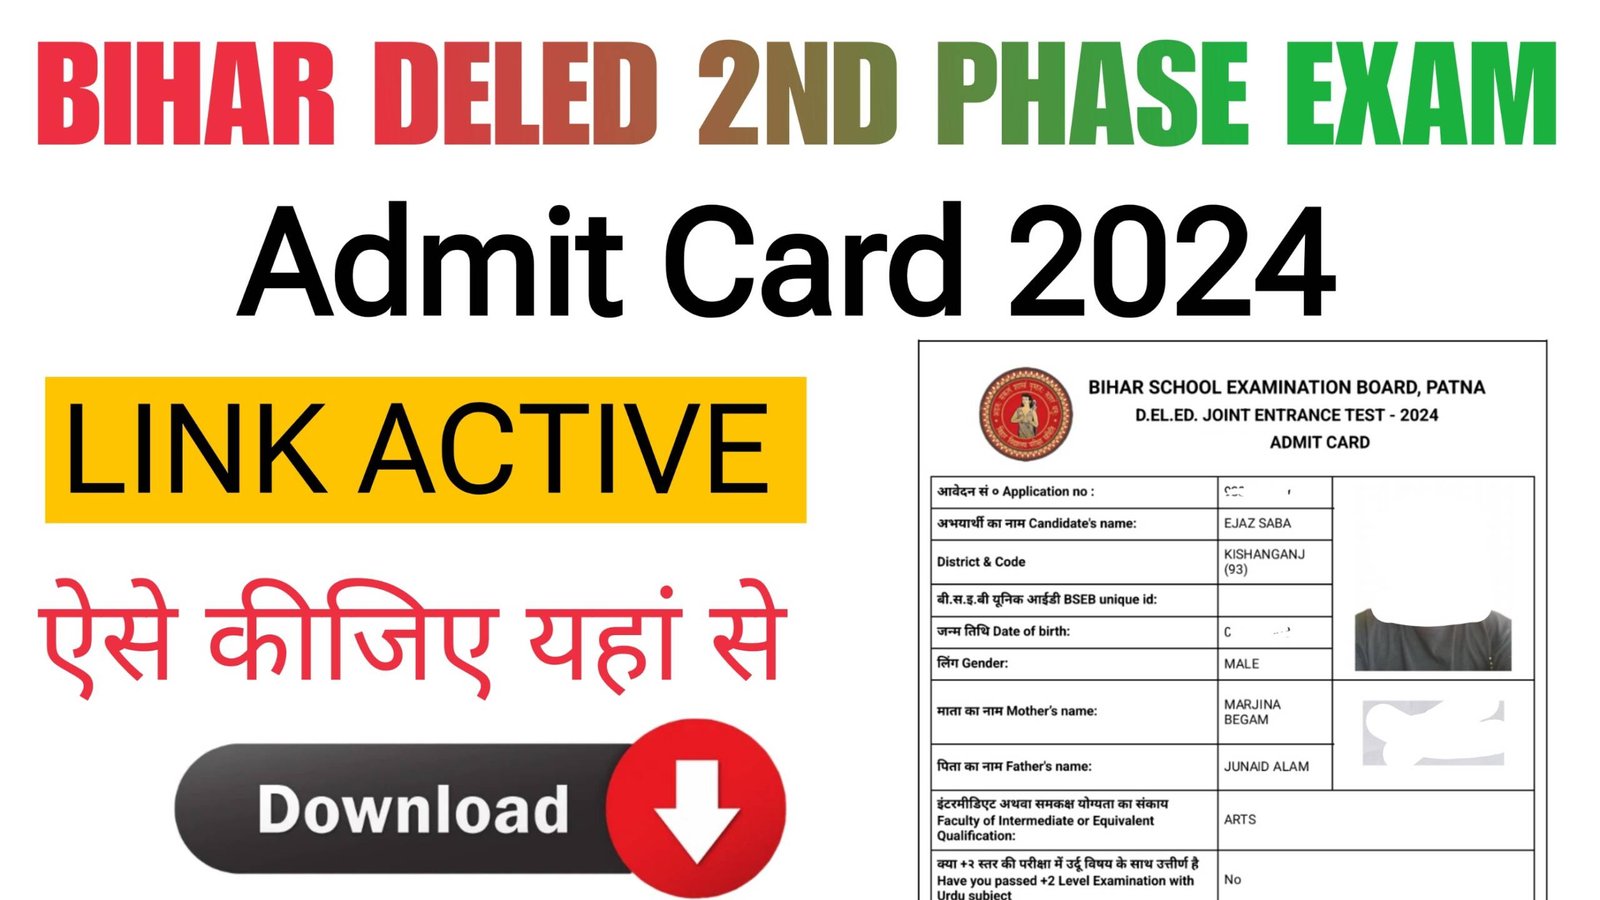 Bihar Deled 2nd Phase Exam Admit Card 2024